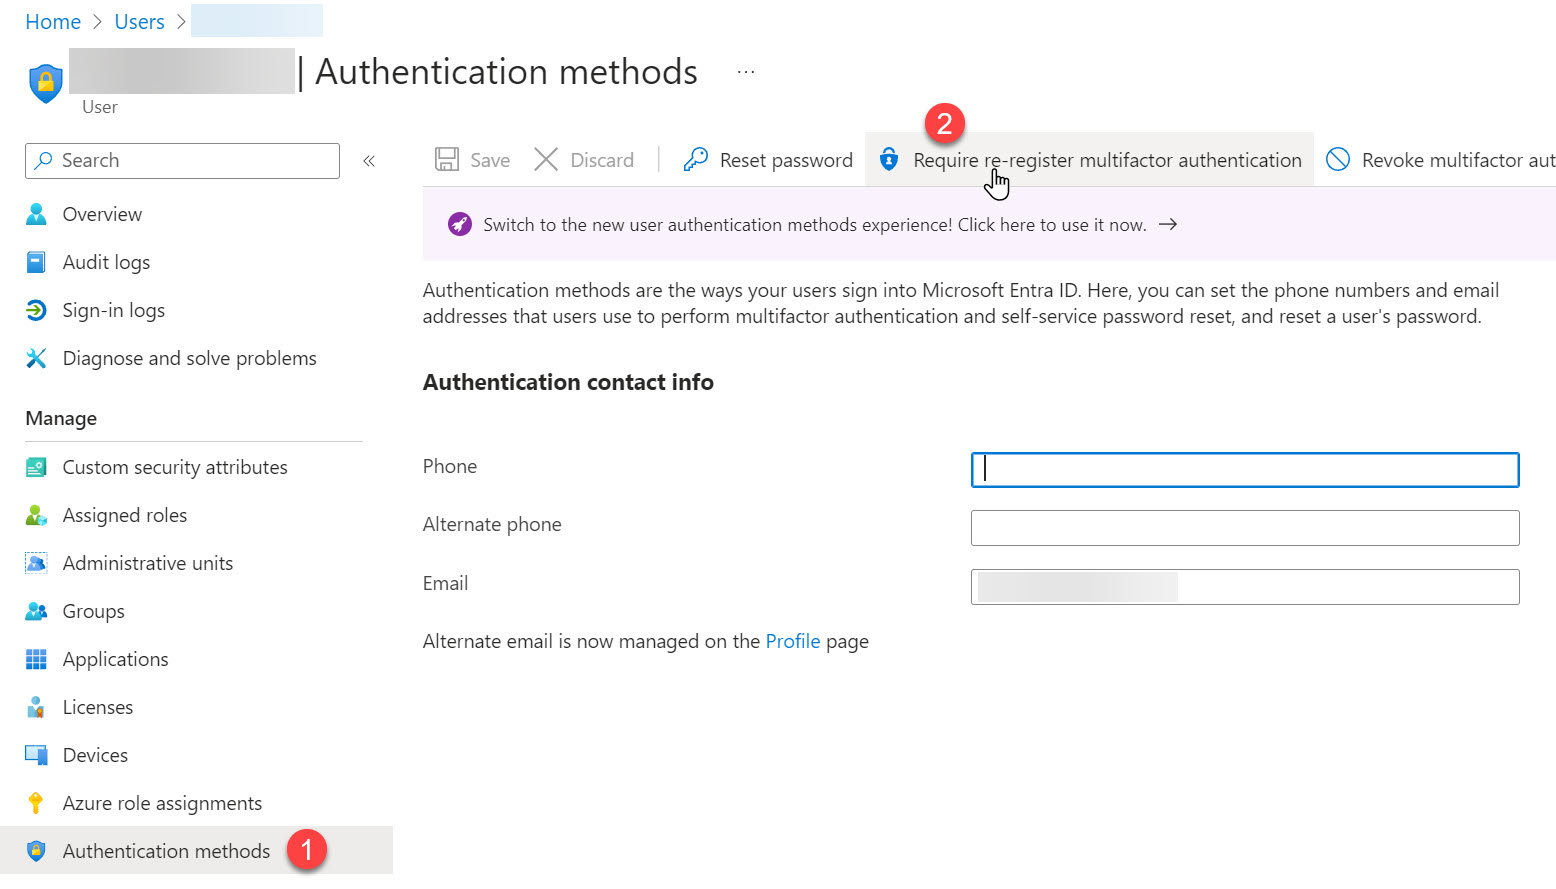 Require re-register multifactor authentication